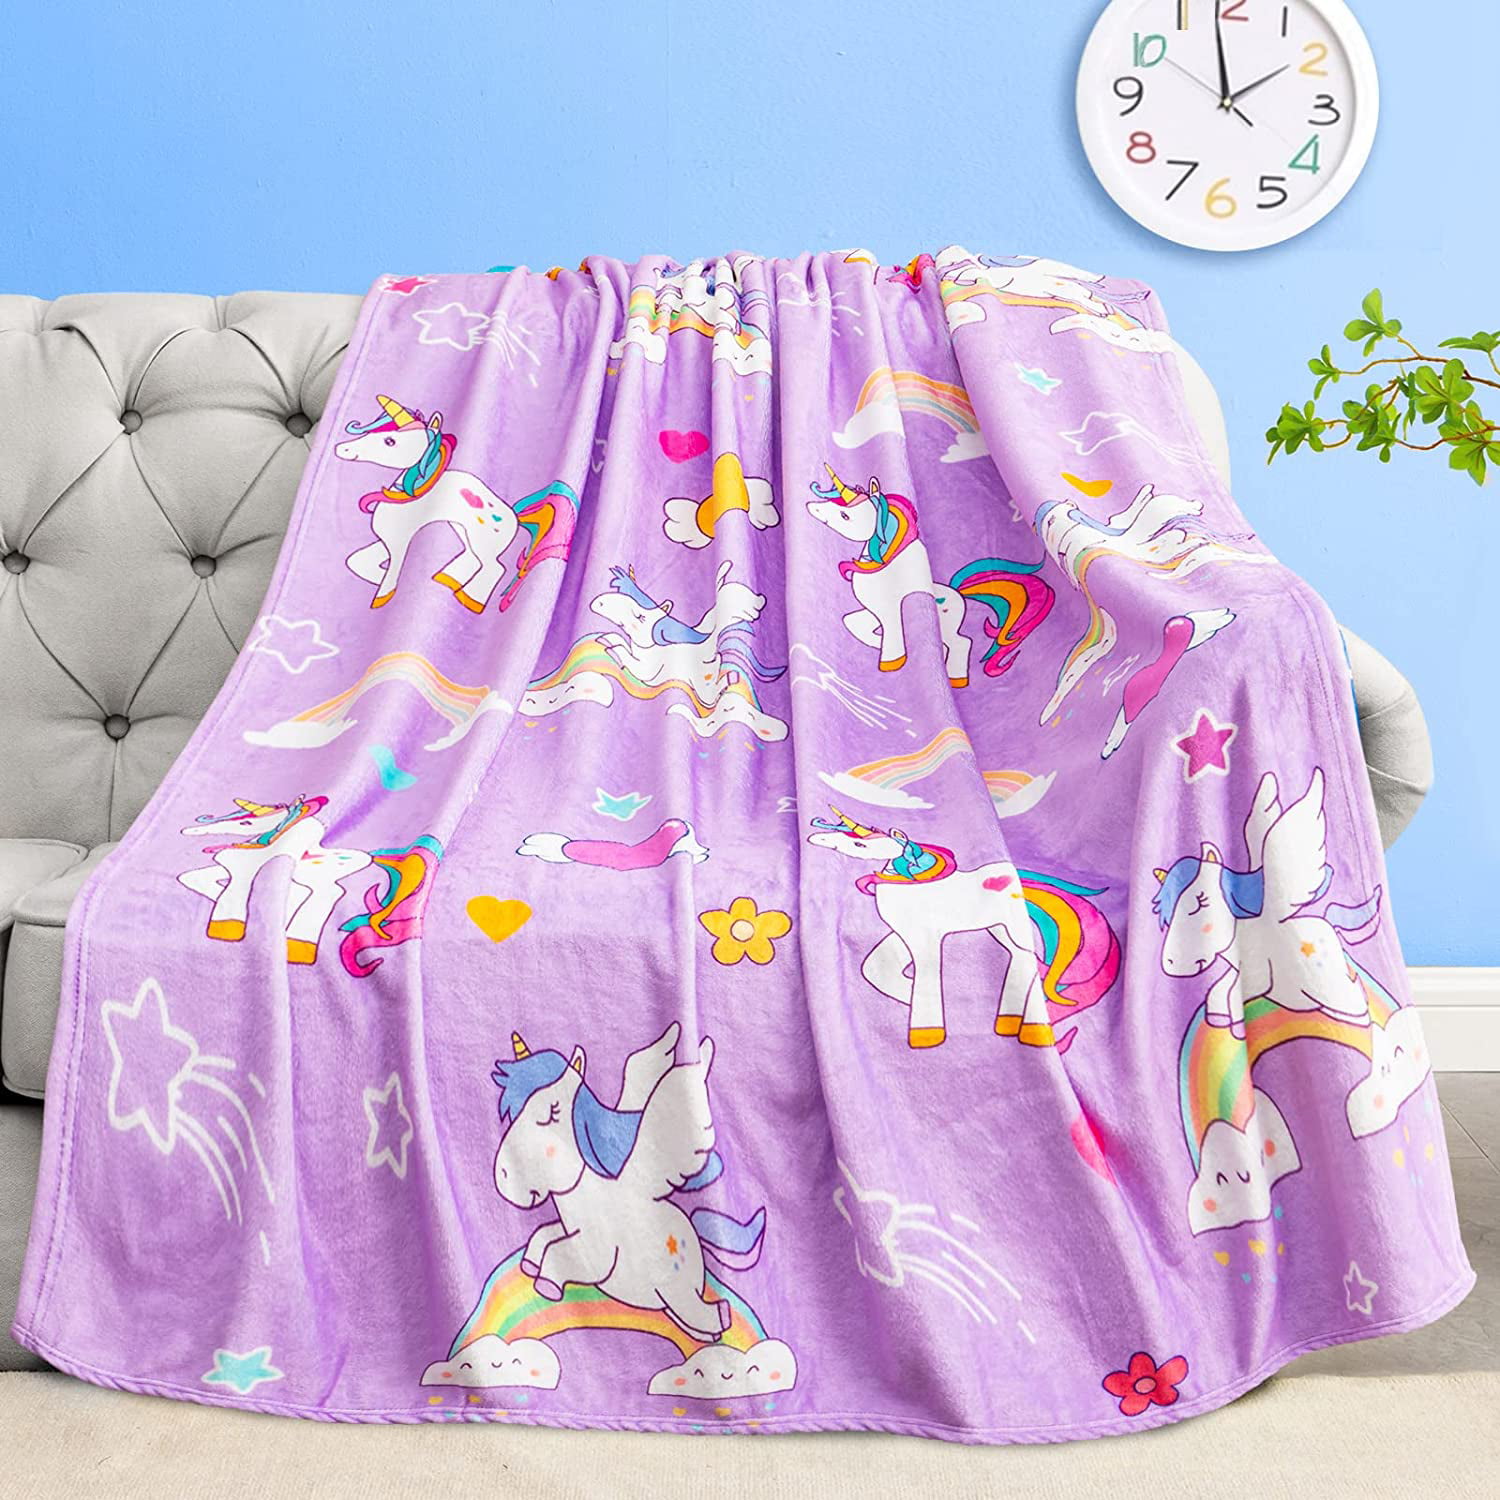  CAPITUNEISKINEPA Unicorn Blanket - Unicorn Gifts for